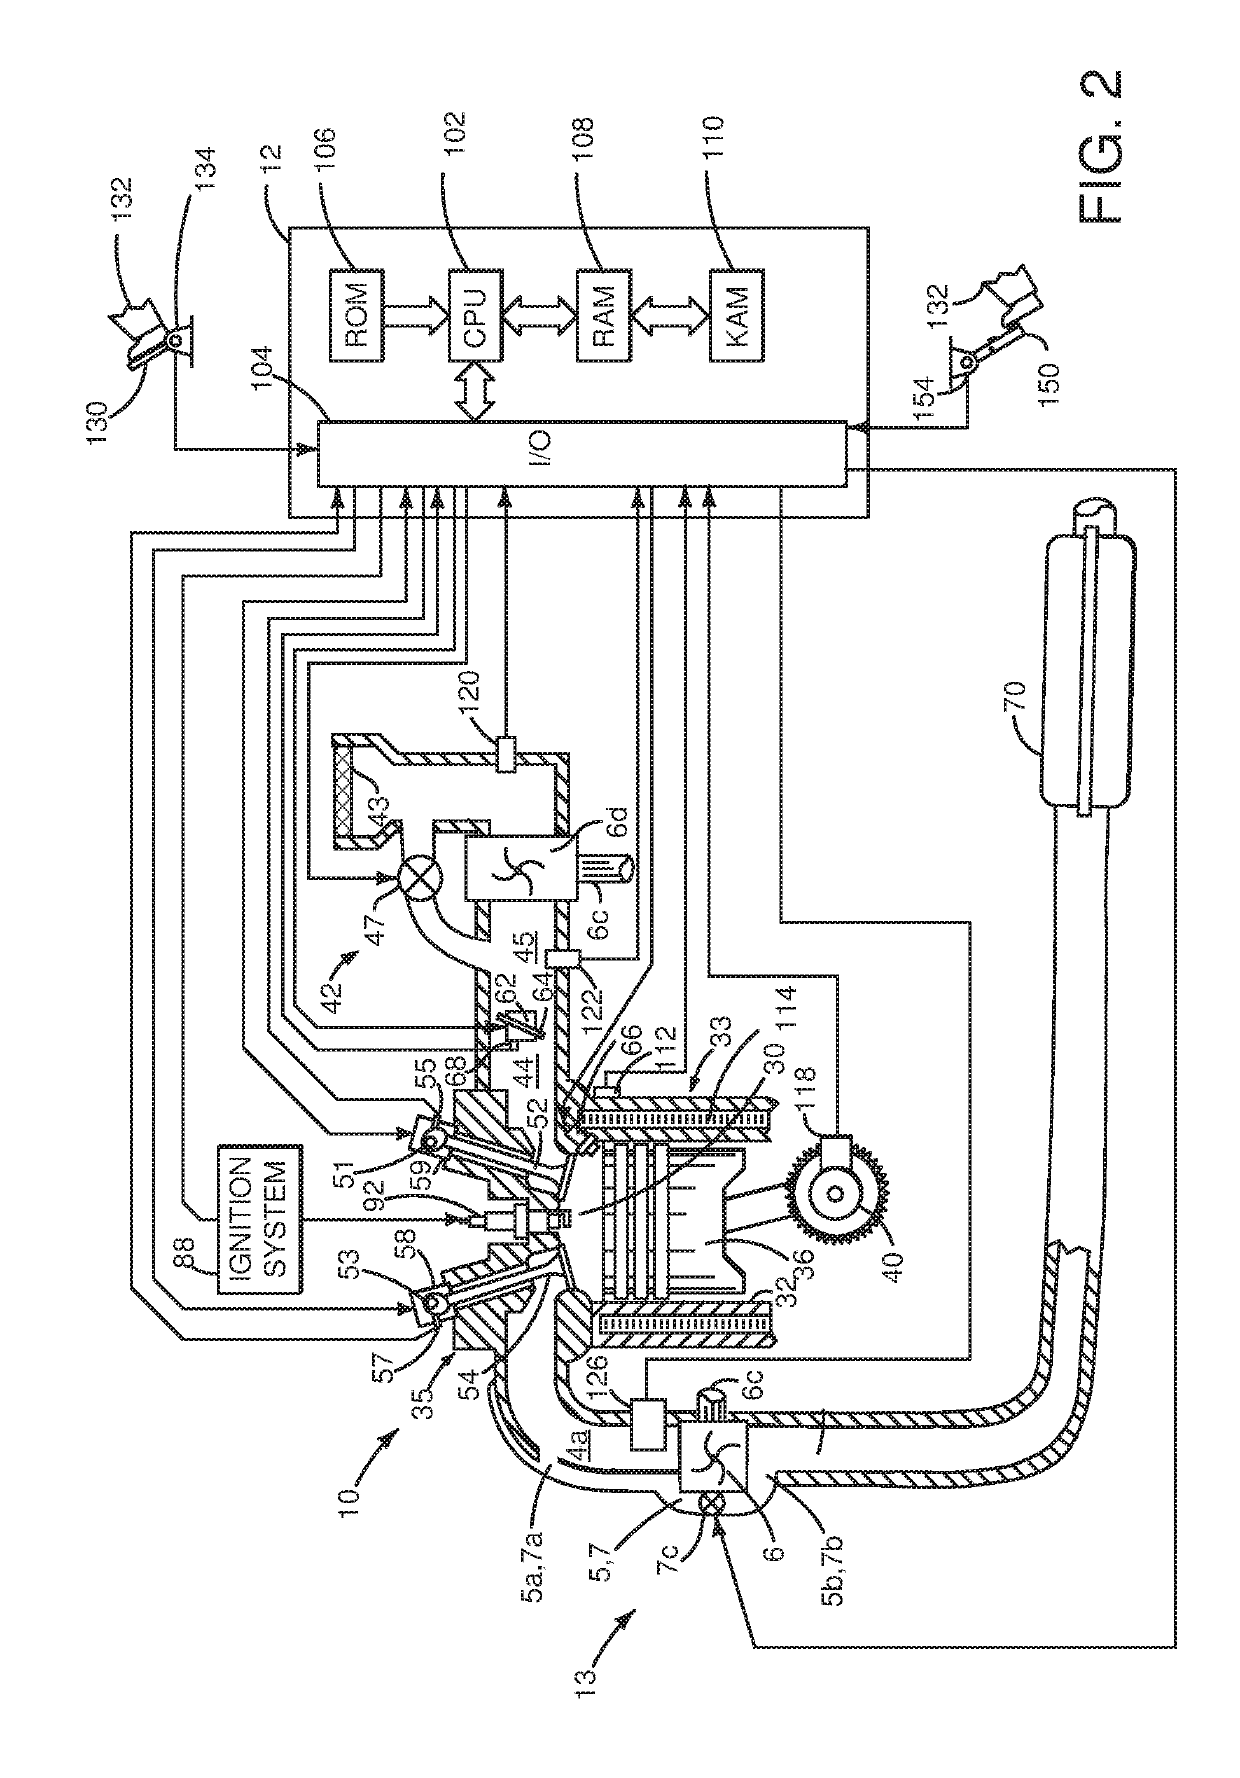 Internal combustion engine with exhaust-gas turbocharging arrangement